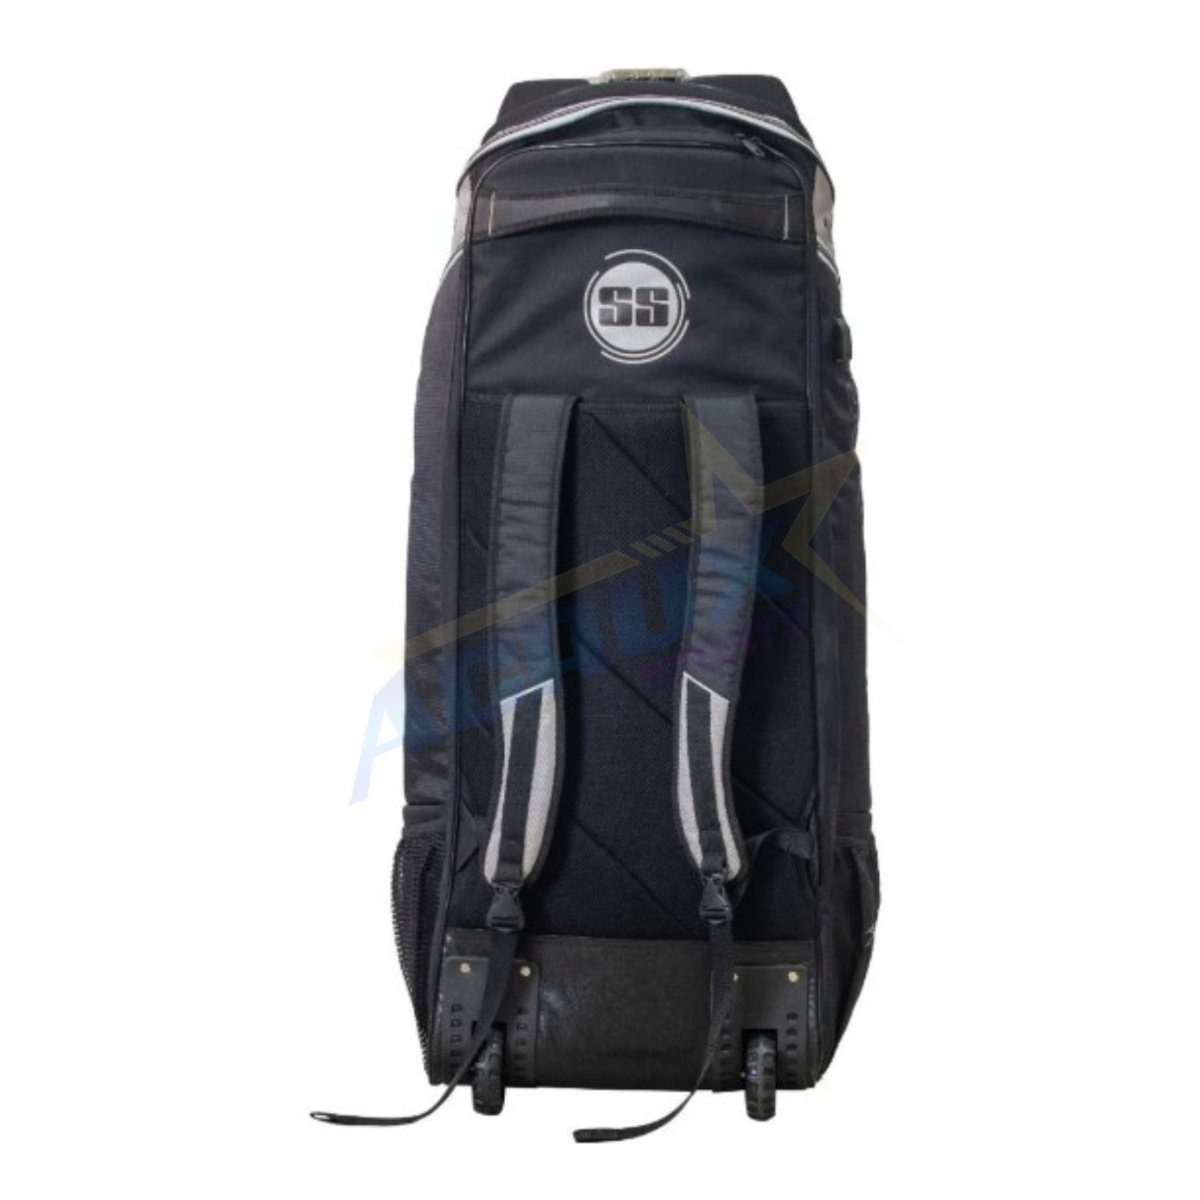 SS World Cup T20 Duffle Cricket Bag Grey - Acrux Sports